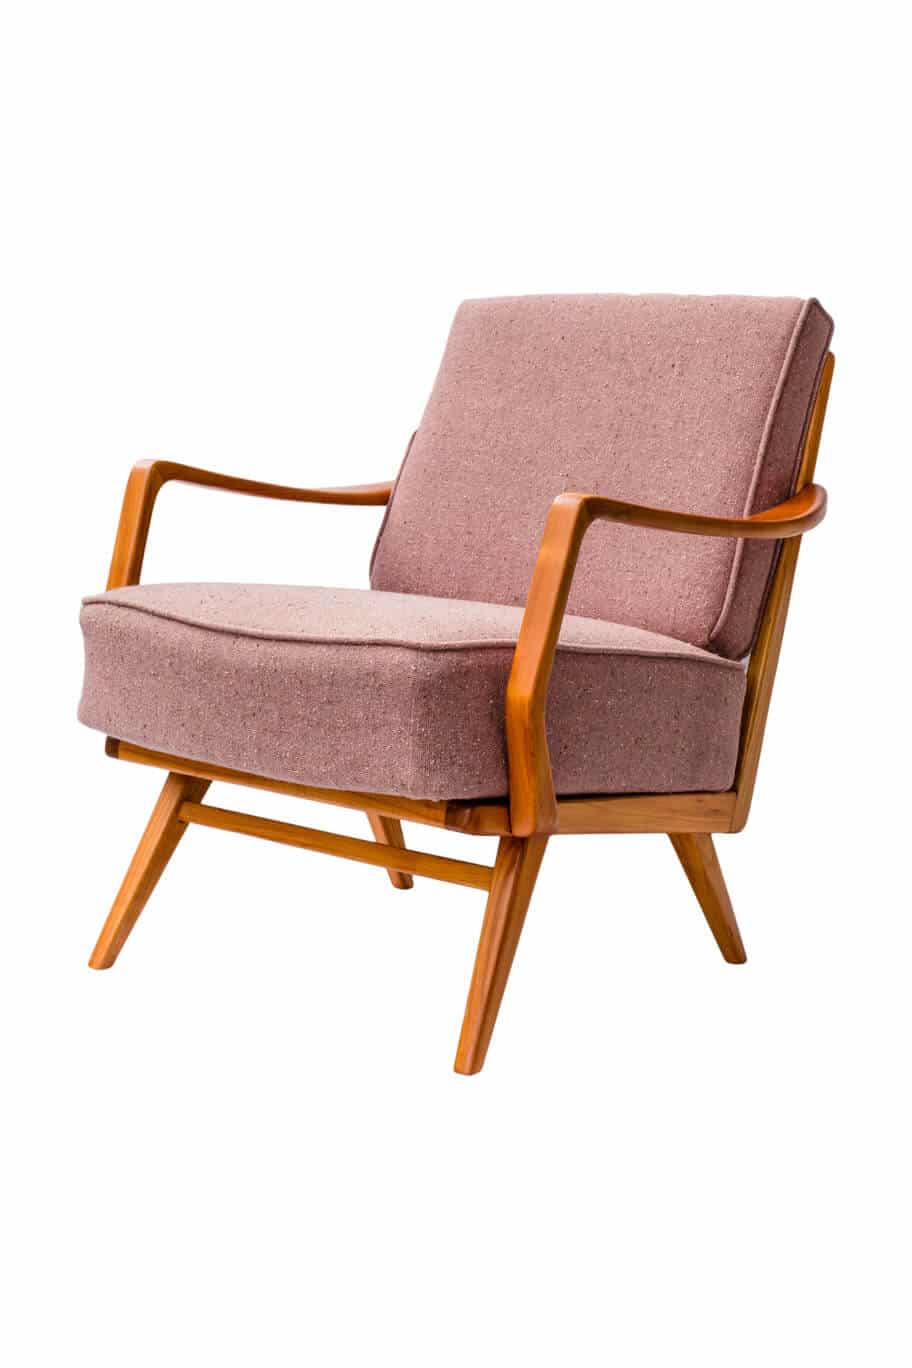 german-armchair-mid-century-modern-walter-wilhelm-knoll